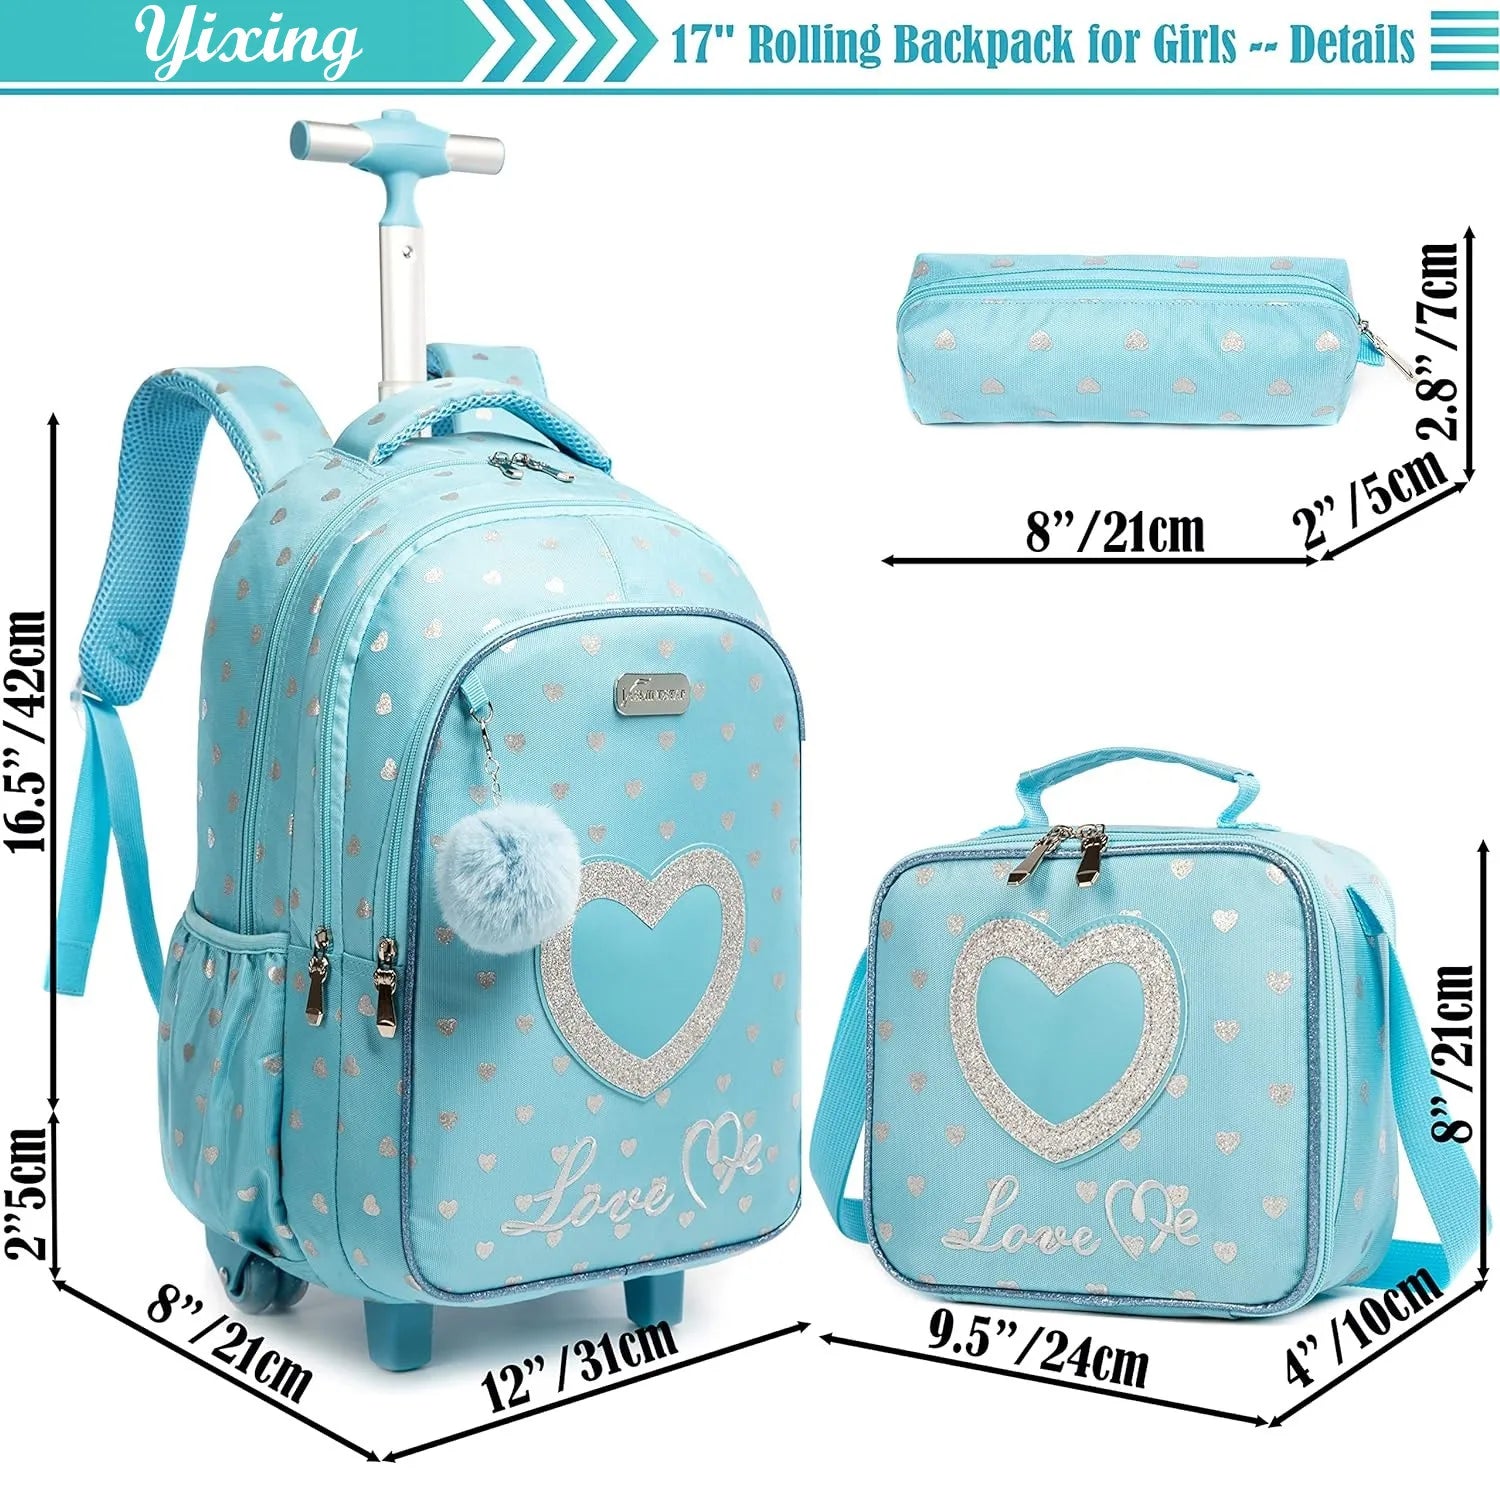 Sweetheart Trolley Backpack Set for Girls